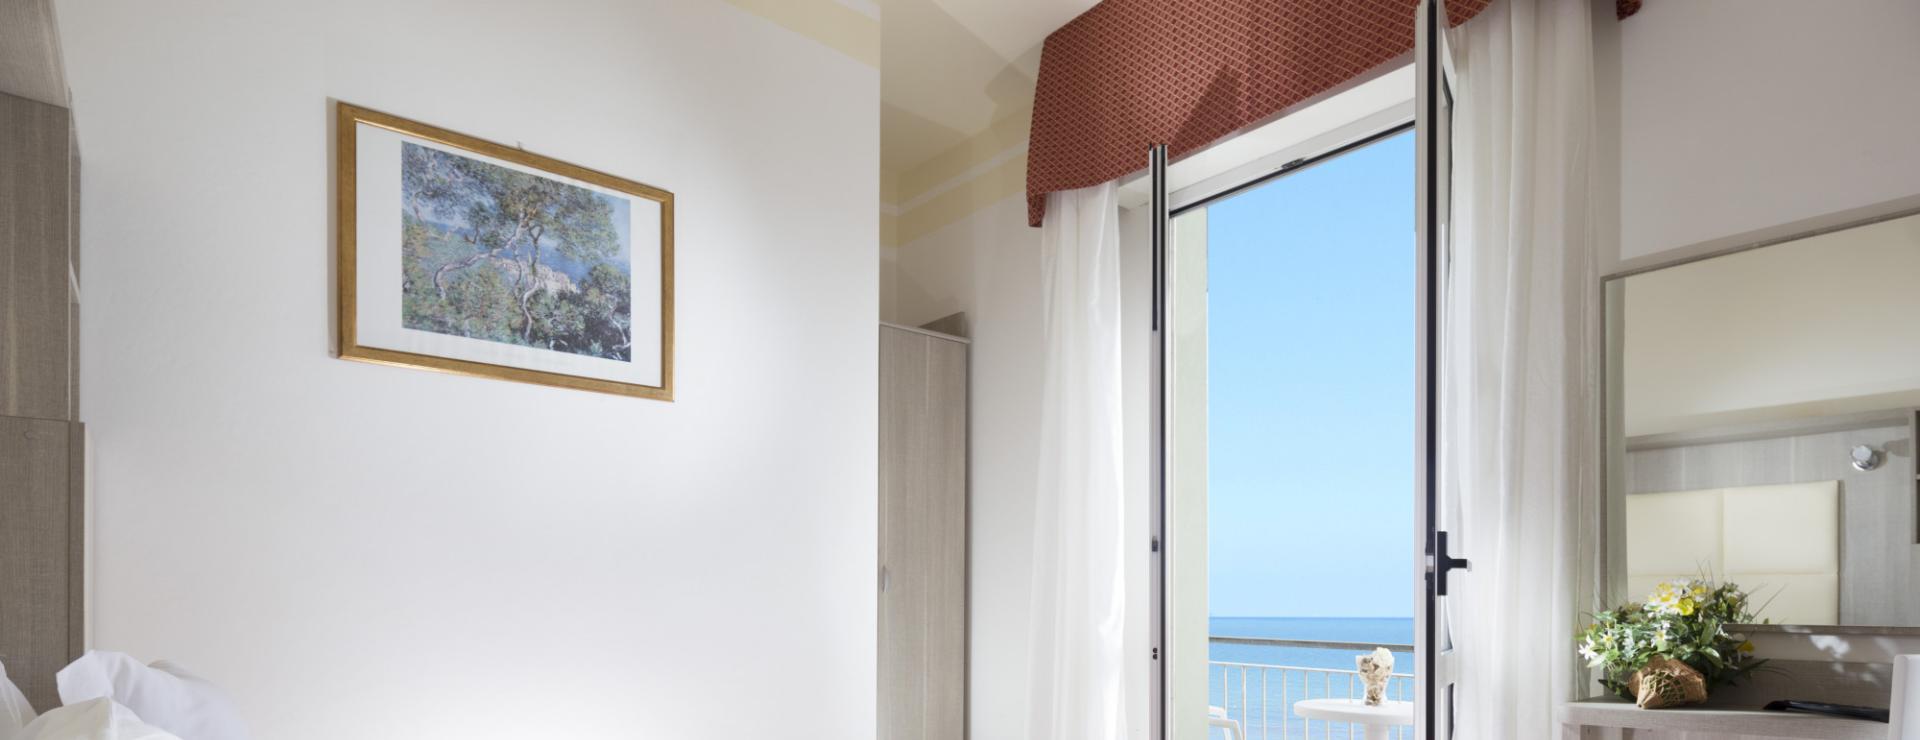 Juli Angebot Hotel am Meer in Rimini